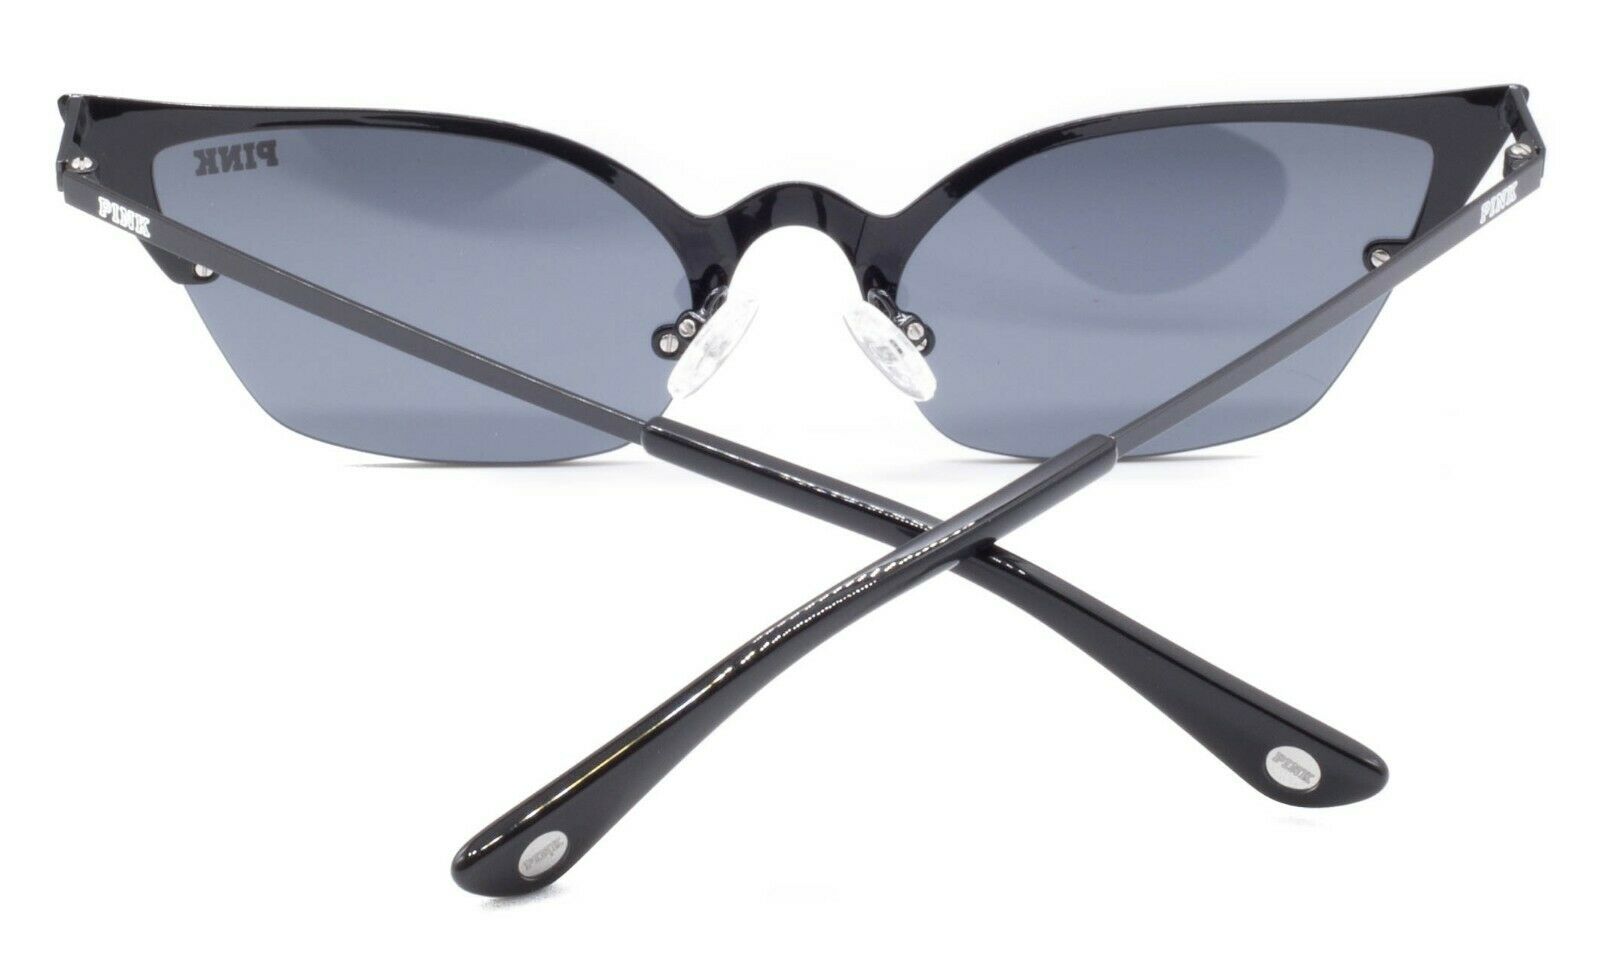 PINK VICTORIA'S SECRET PK0016 01A 55mm Sunglasses Eyewear Shades Frames - New